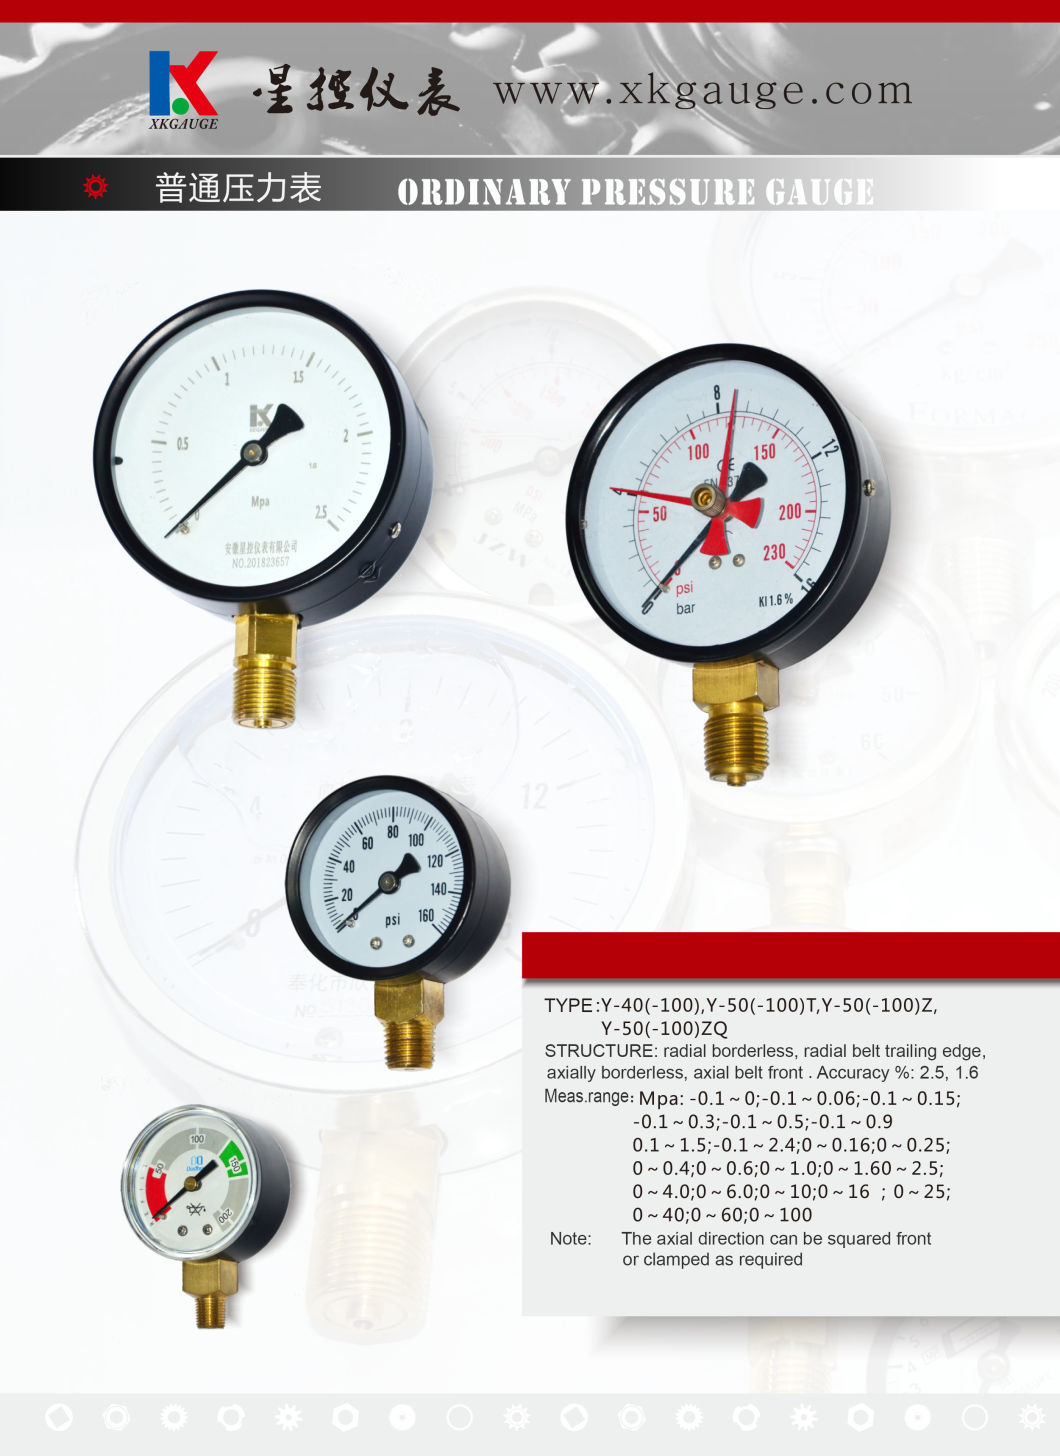 Steel Pressure Gauge Manometer Piezmeter